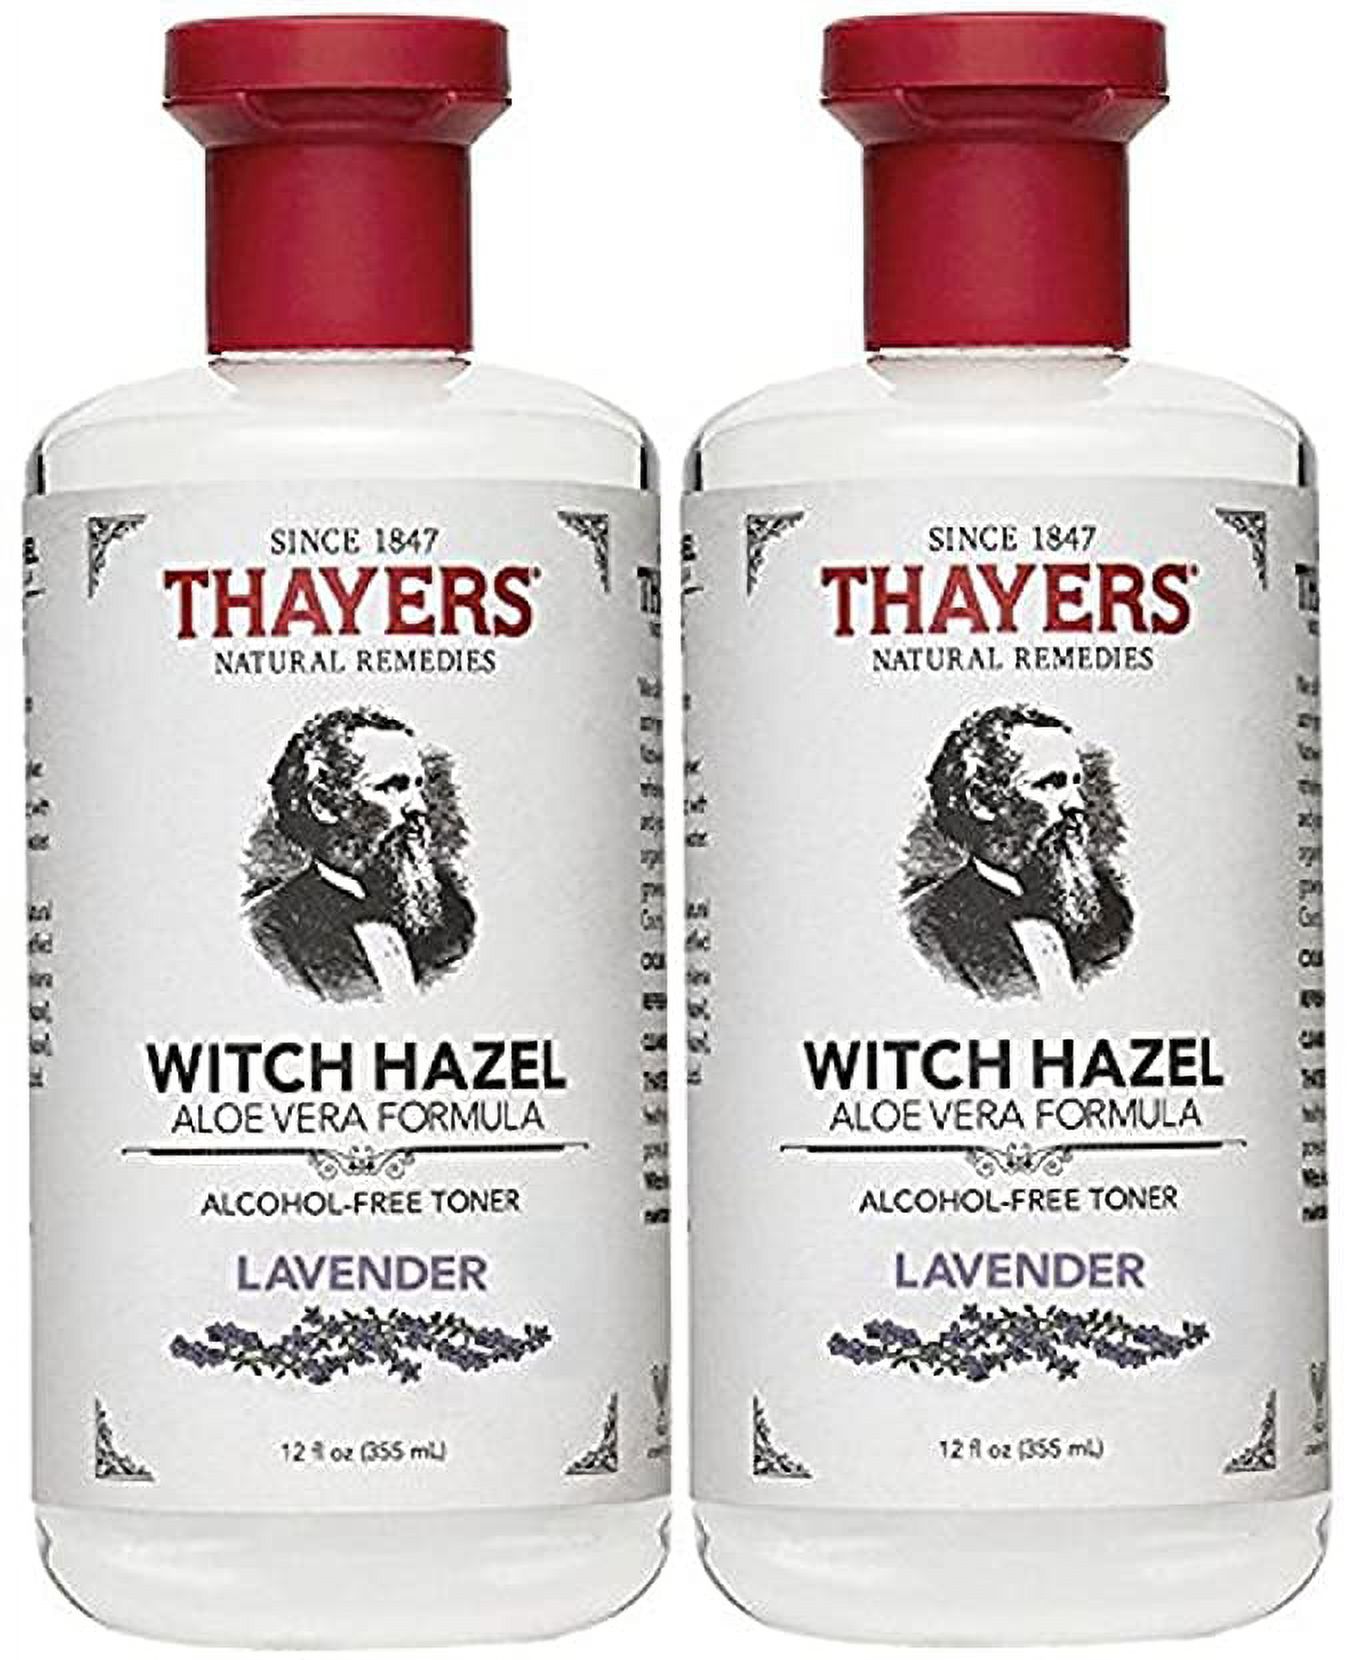 Thayers Alcohol-Free Witch Hazel with Organic Aloe Vera Formula Toner, Lavender 12 oz (Pack of 2) - image 1 of 1